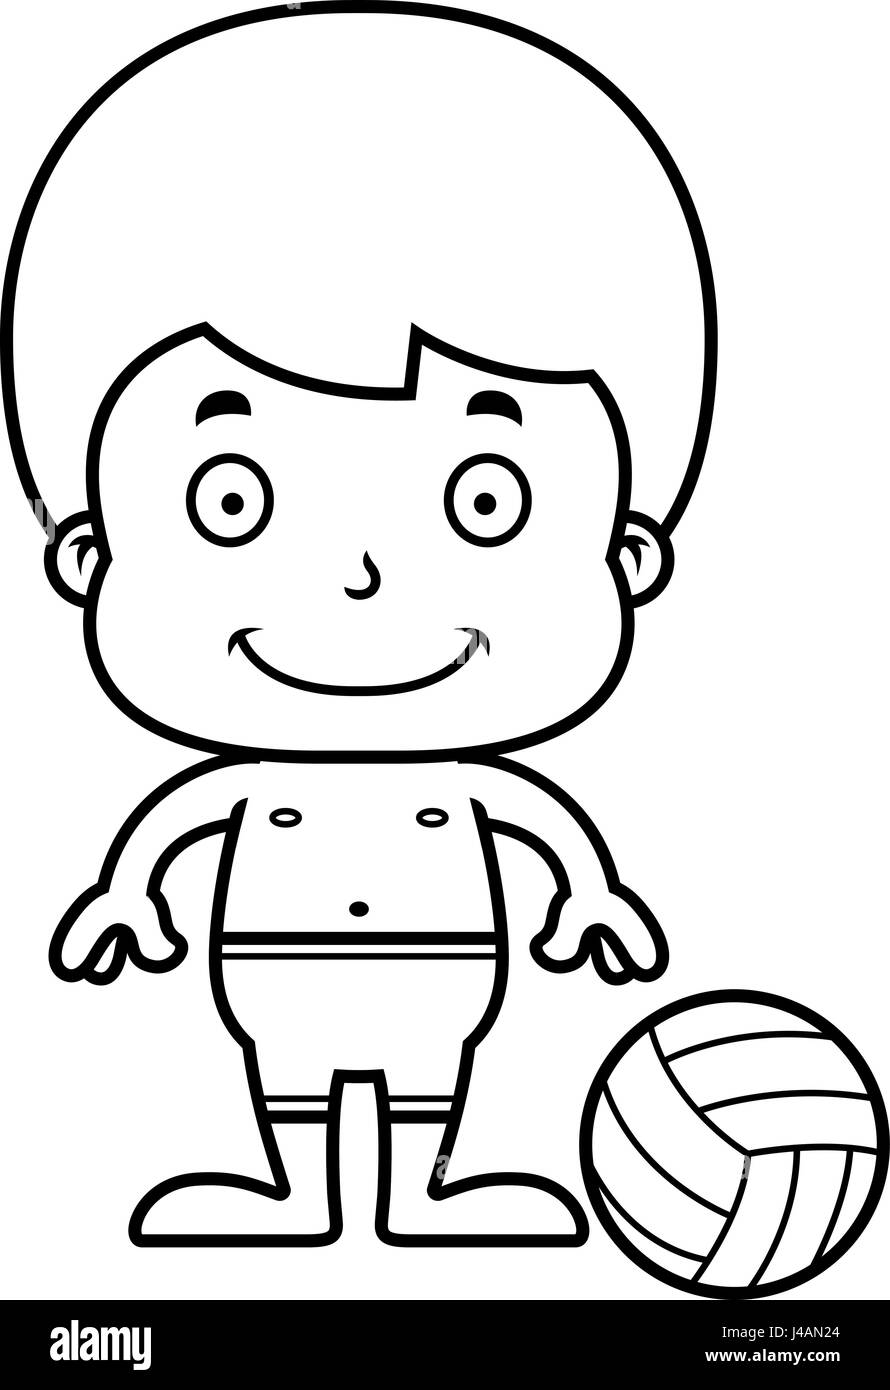 A cartoon beach volleyball player boy smiling Stock Vector Image & Art ...